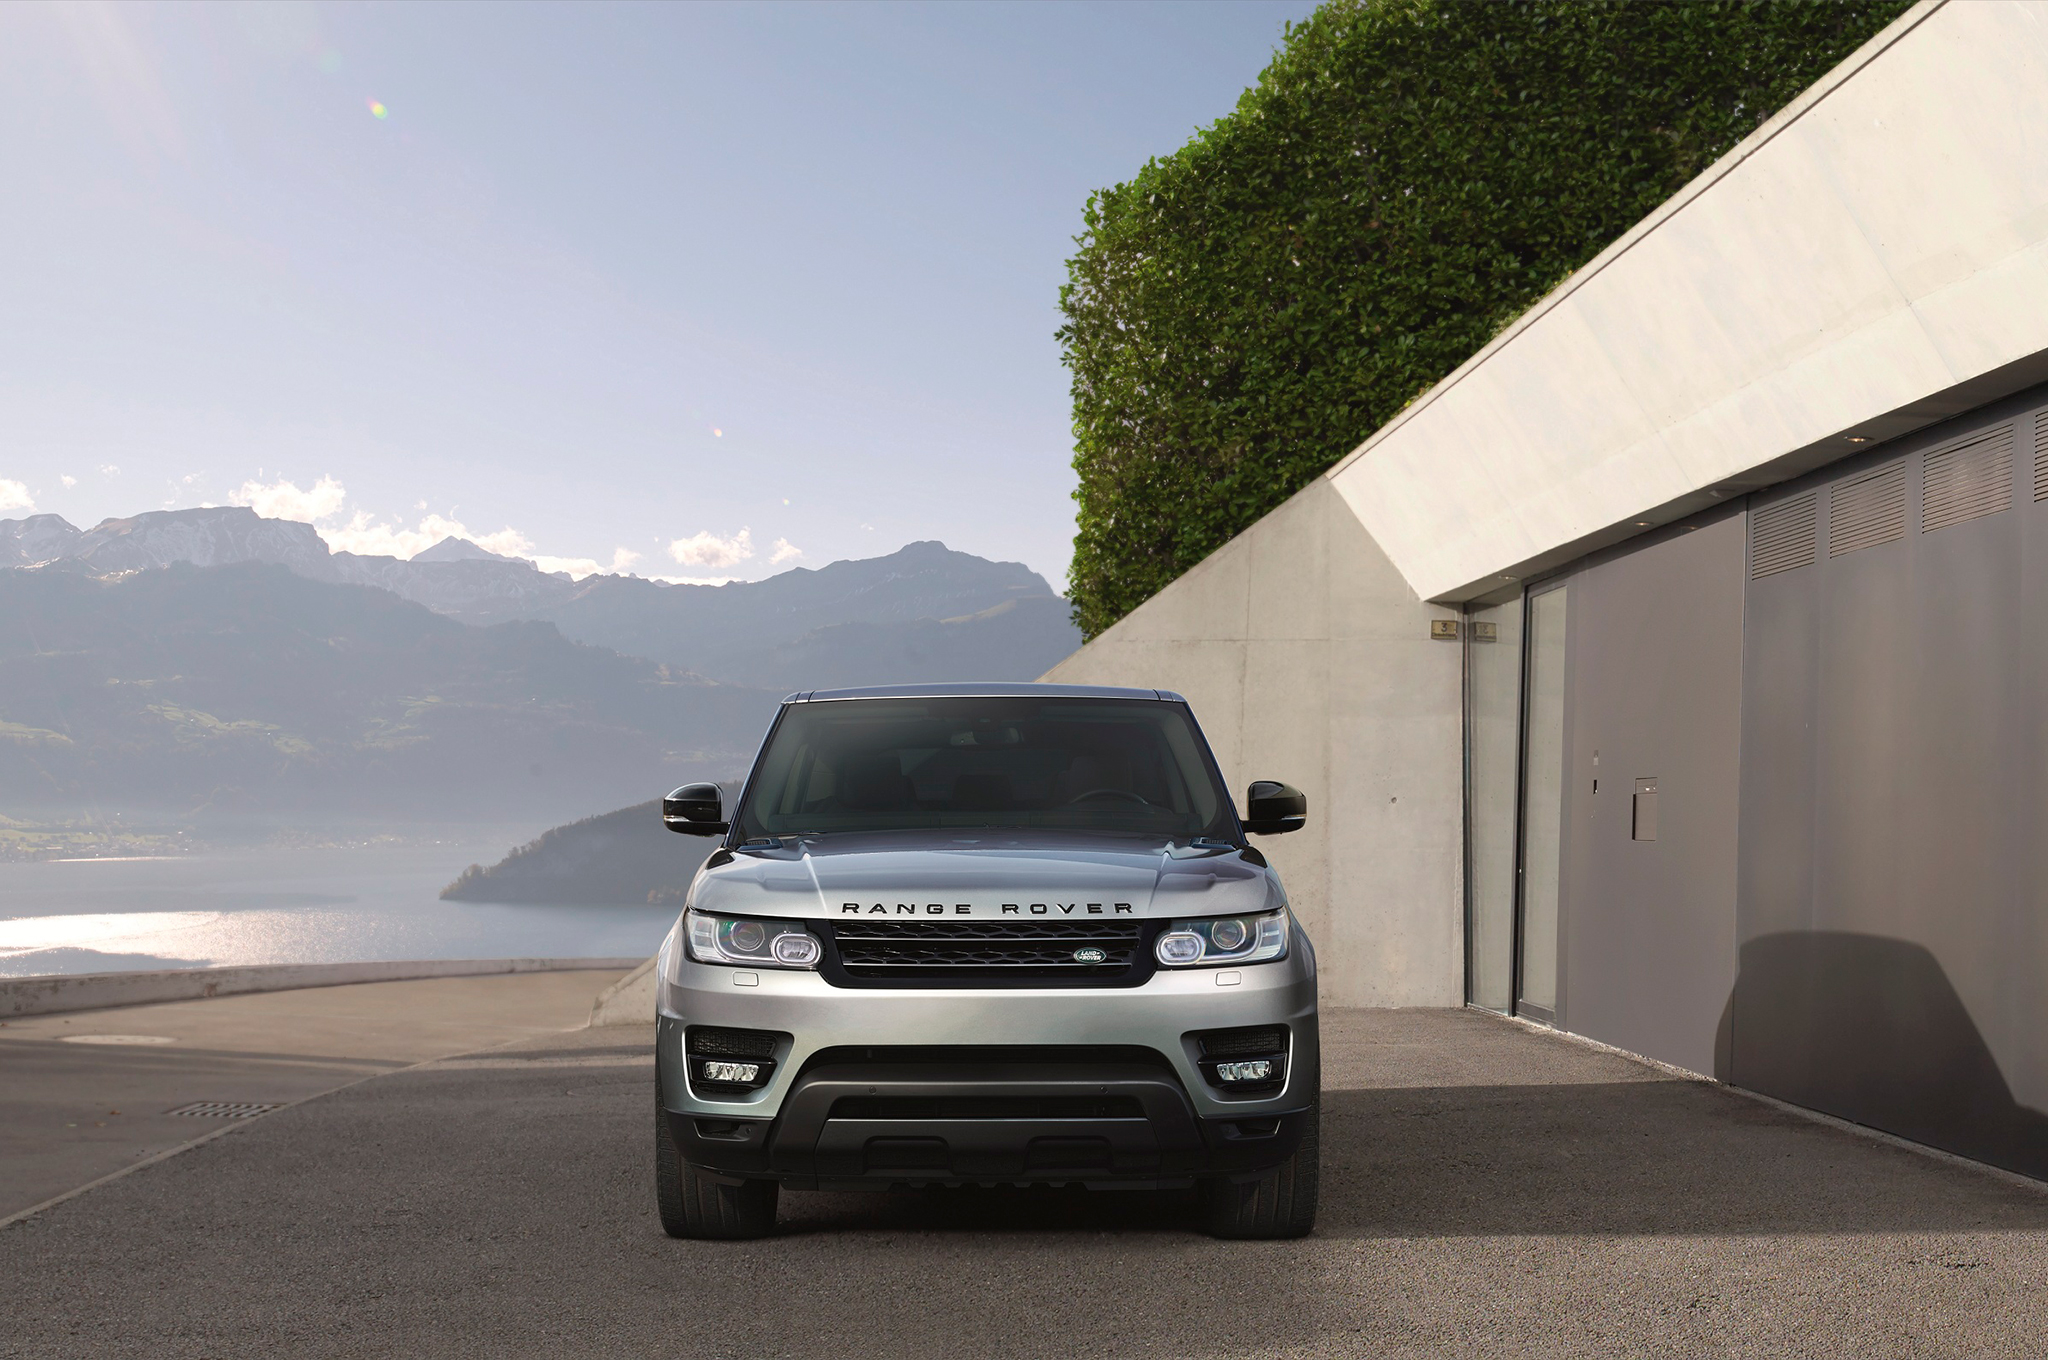 Range Rover Sport Backgrounds, Compatible - PC, Mobile, Gadgets| 2048x1360 px